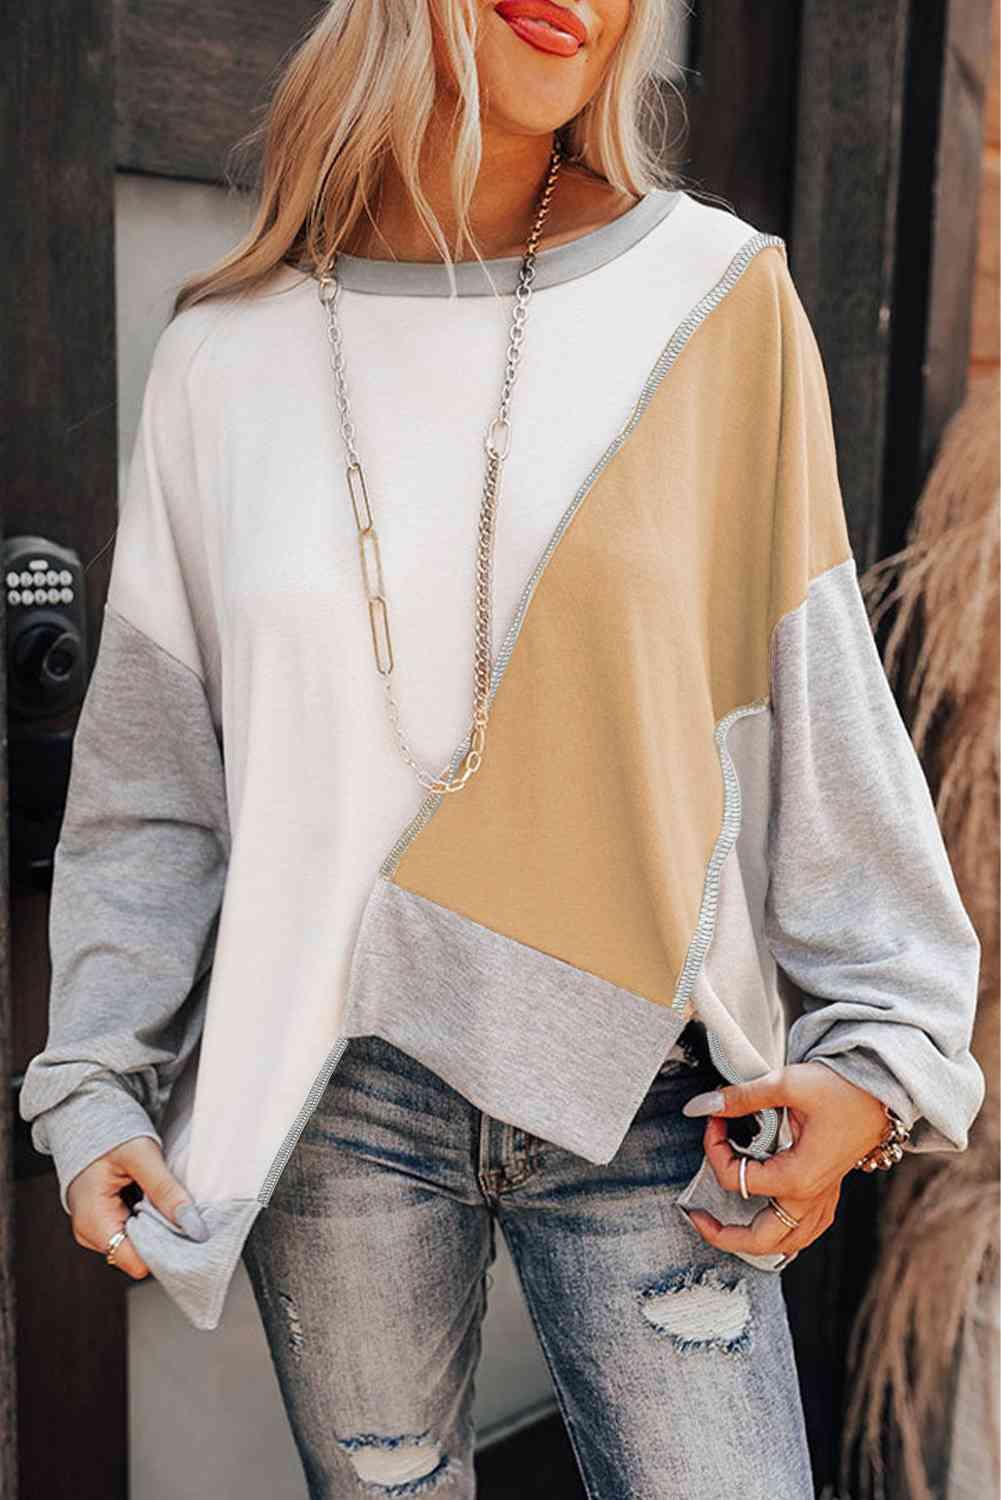 Color Block Exposed Seam Asymmetrical Sweatshirt - Immenzive